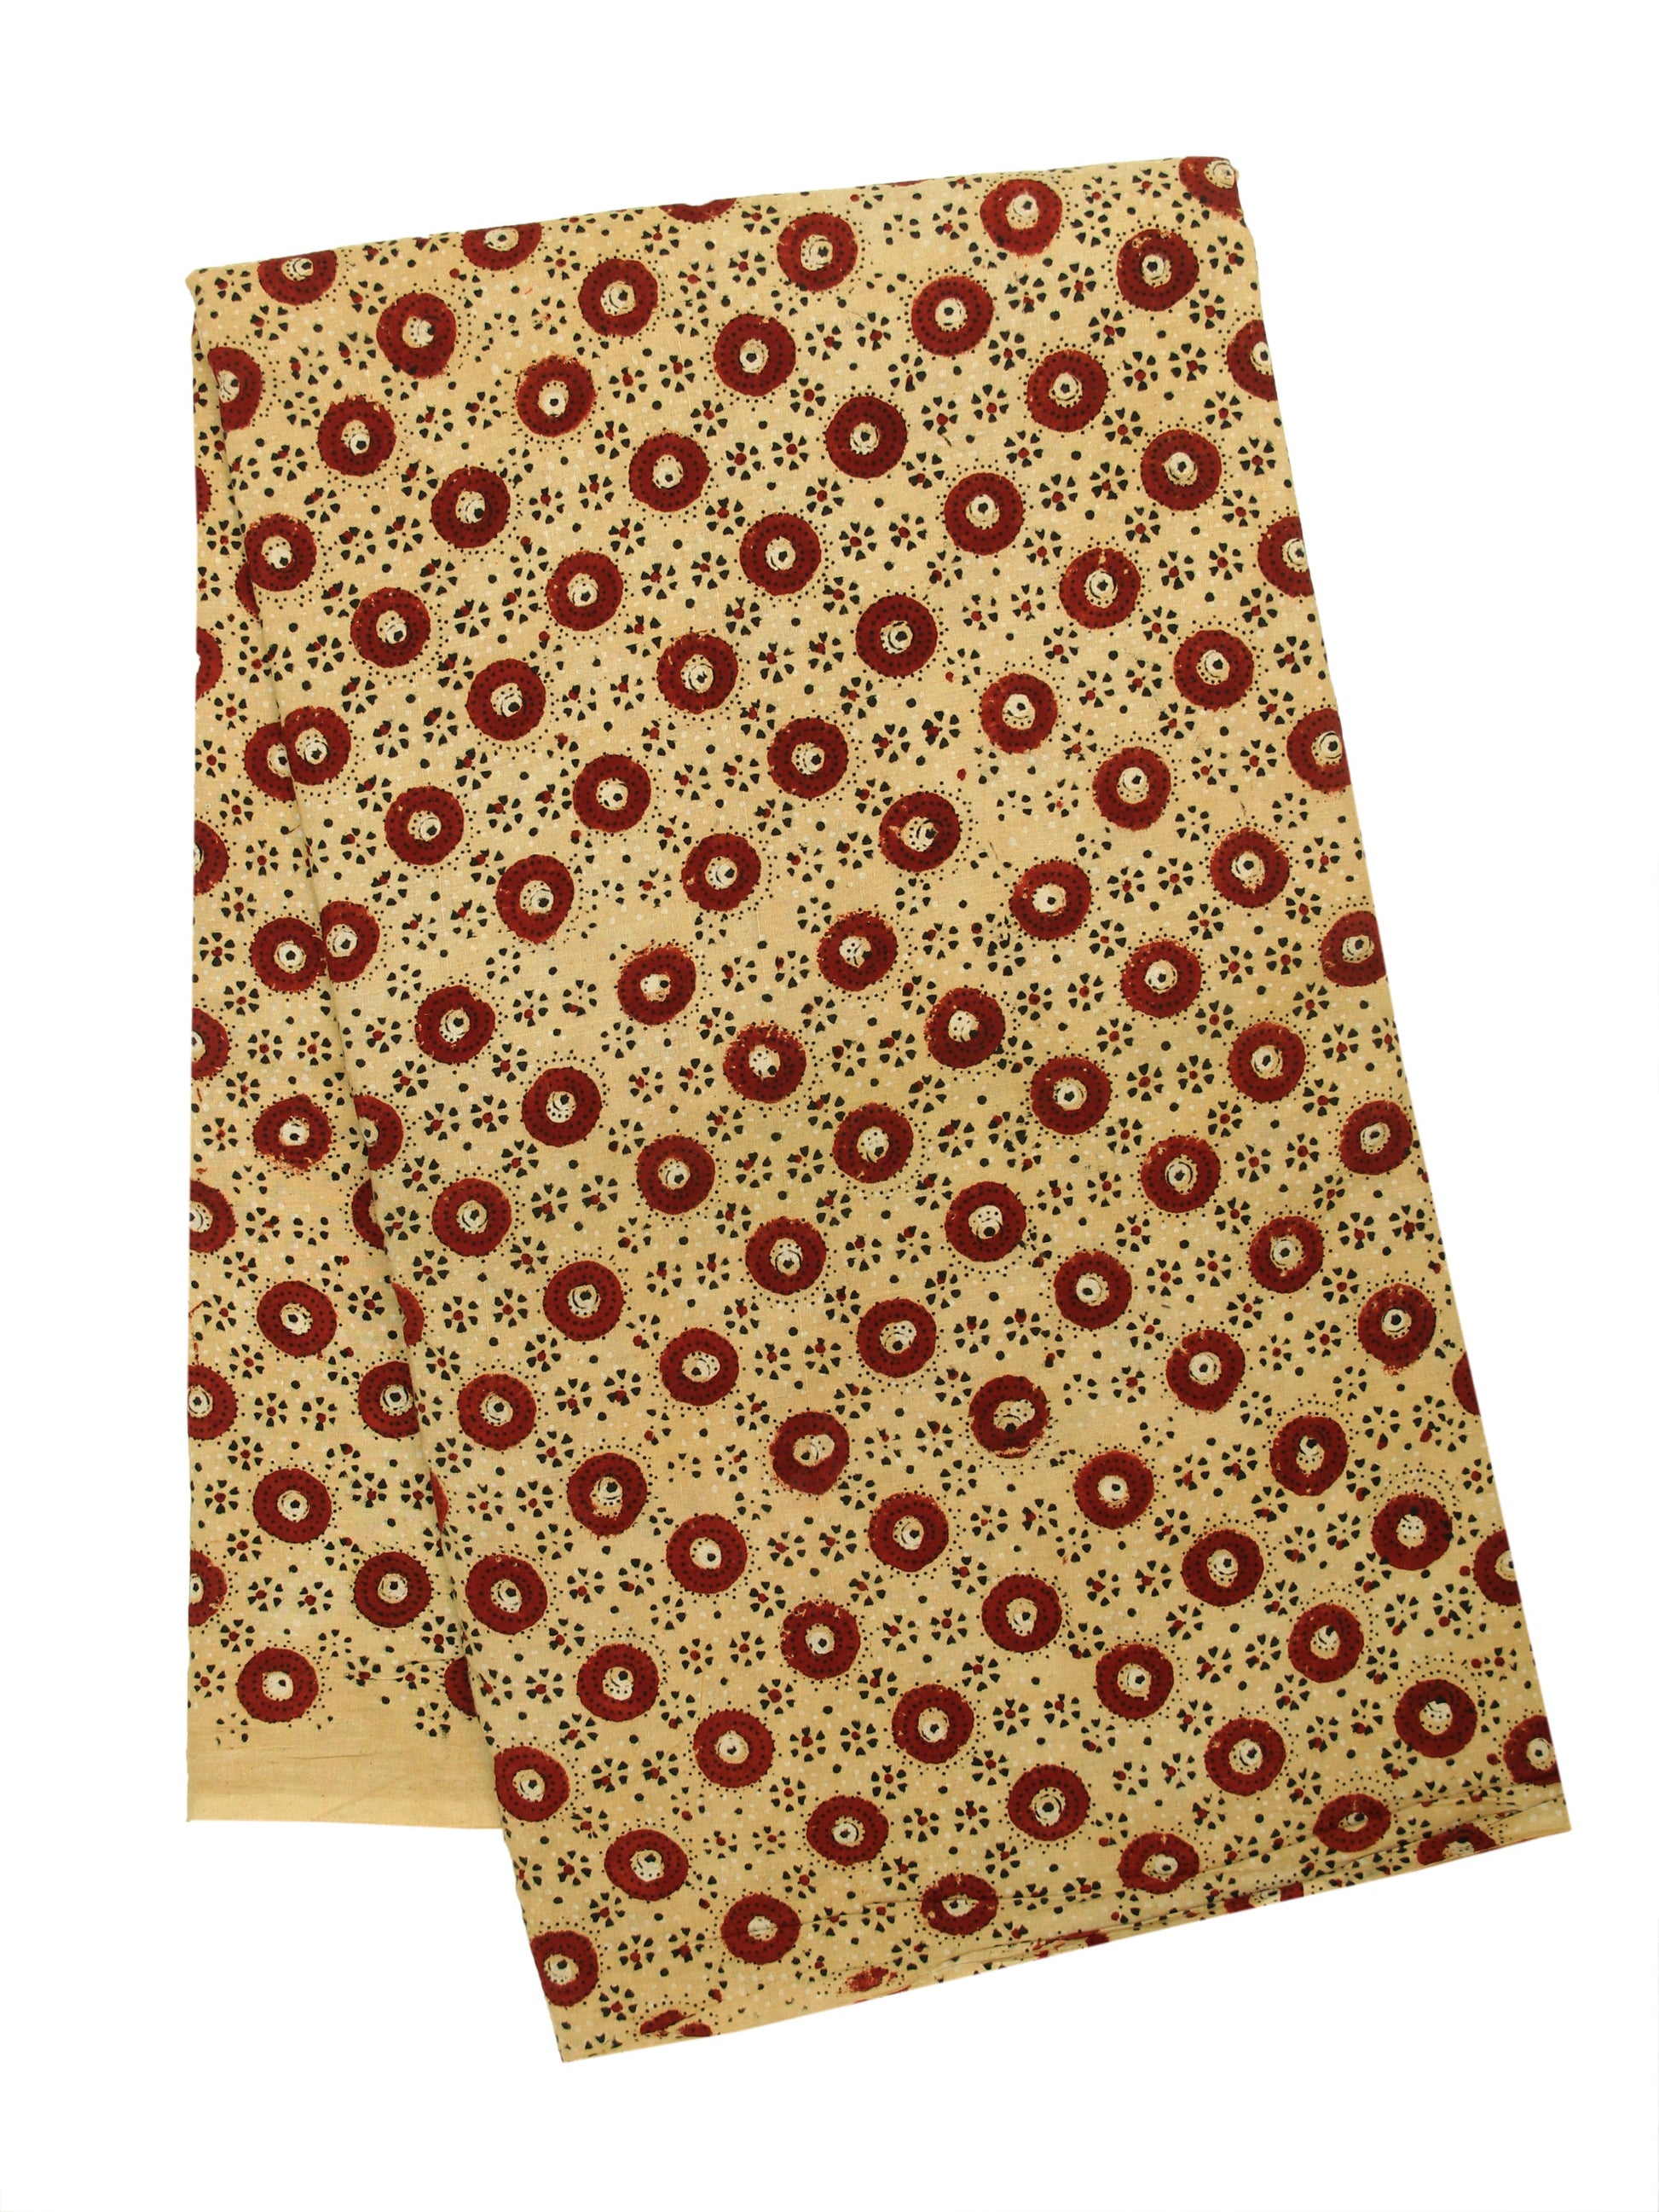 Ajrakh subtle turmeric yellow fabric, Ajrakh hand block print cotton fabric dyed in turmeric, Slow fashion